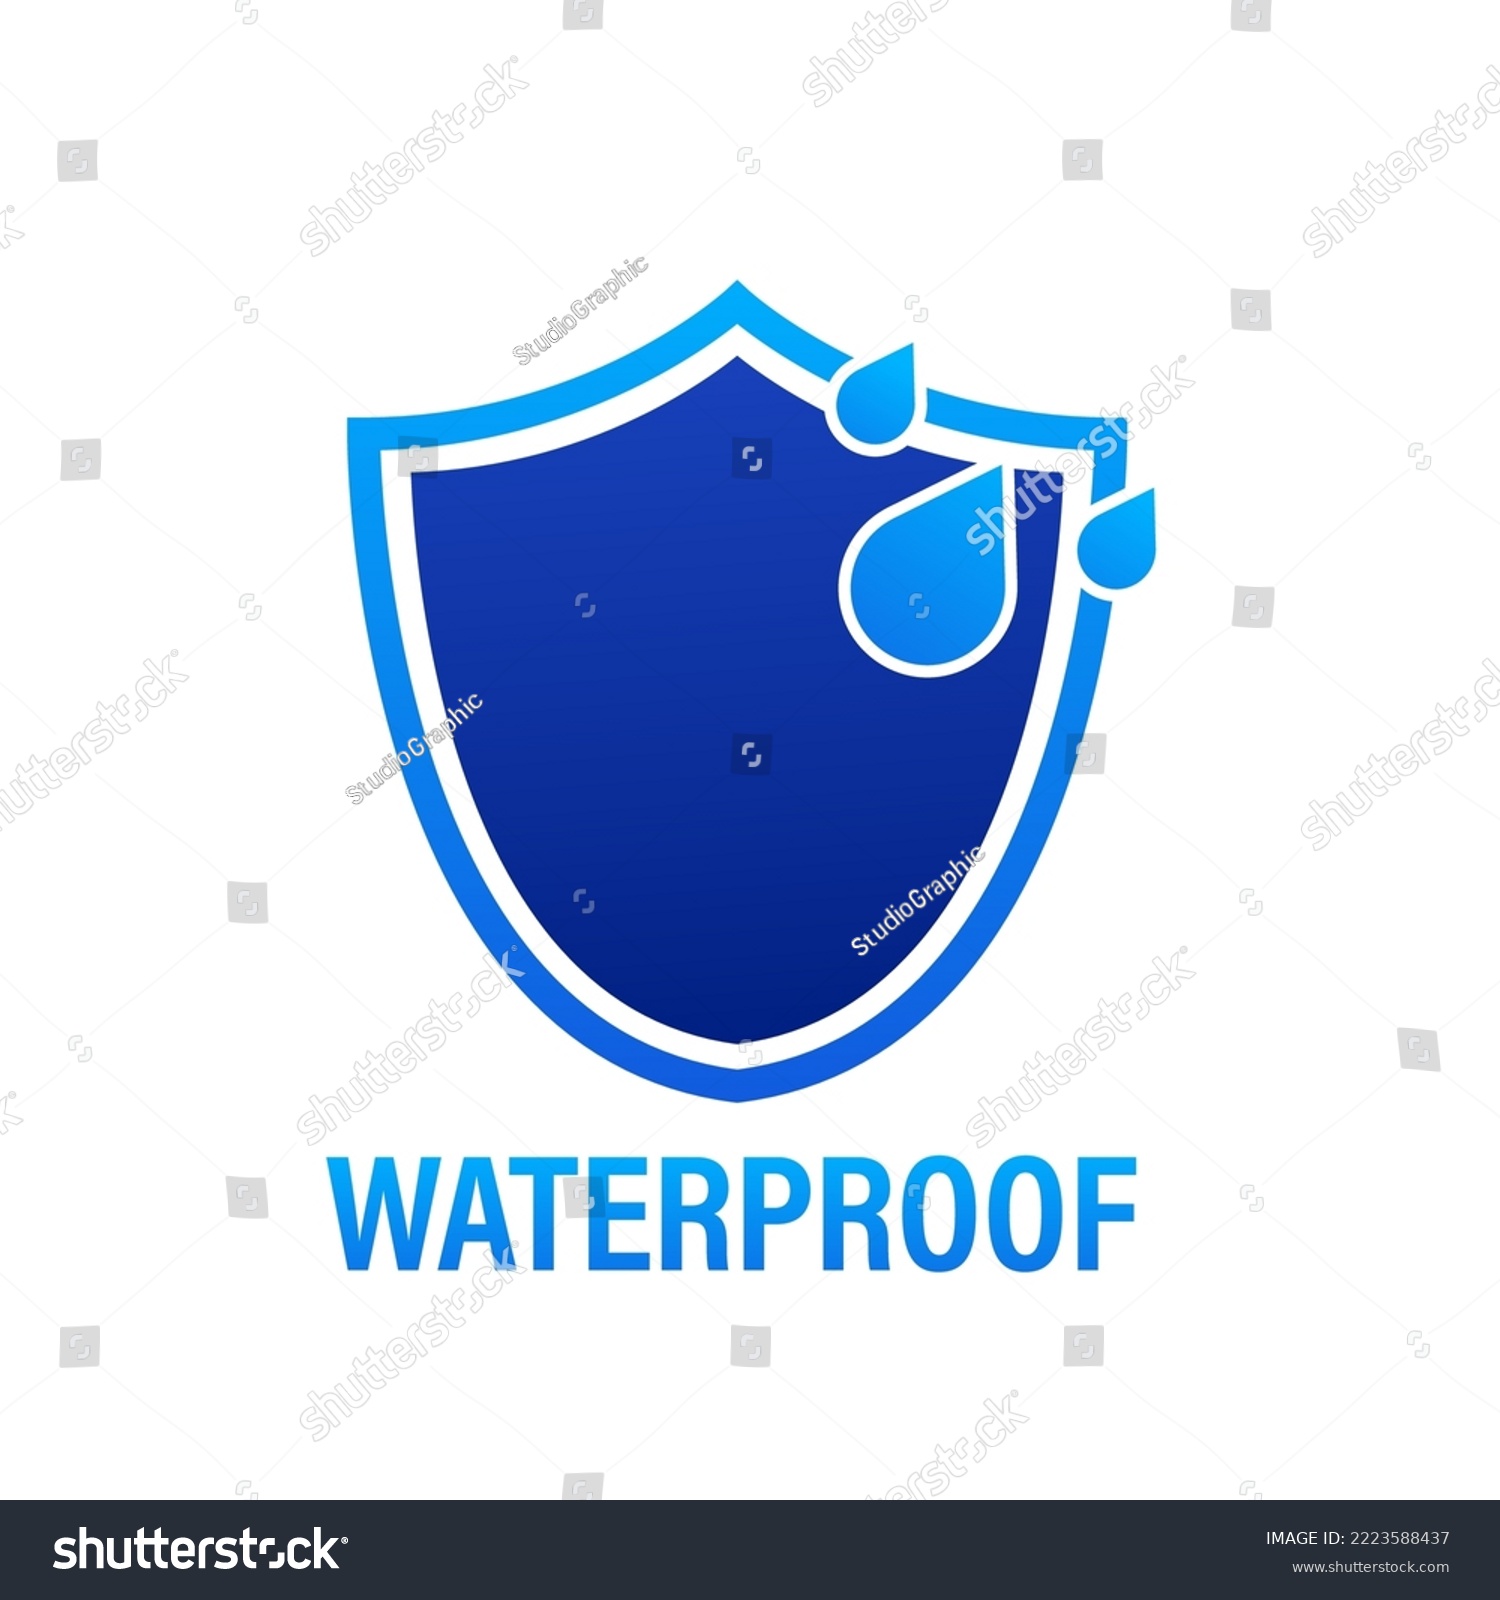 Waterproof symbol. Rainproof label sign. Water resistant drop icon in protective shield. Vector illustration #2223588437